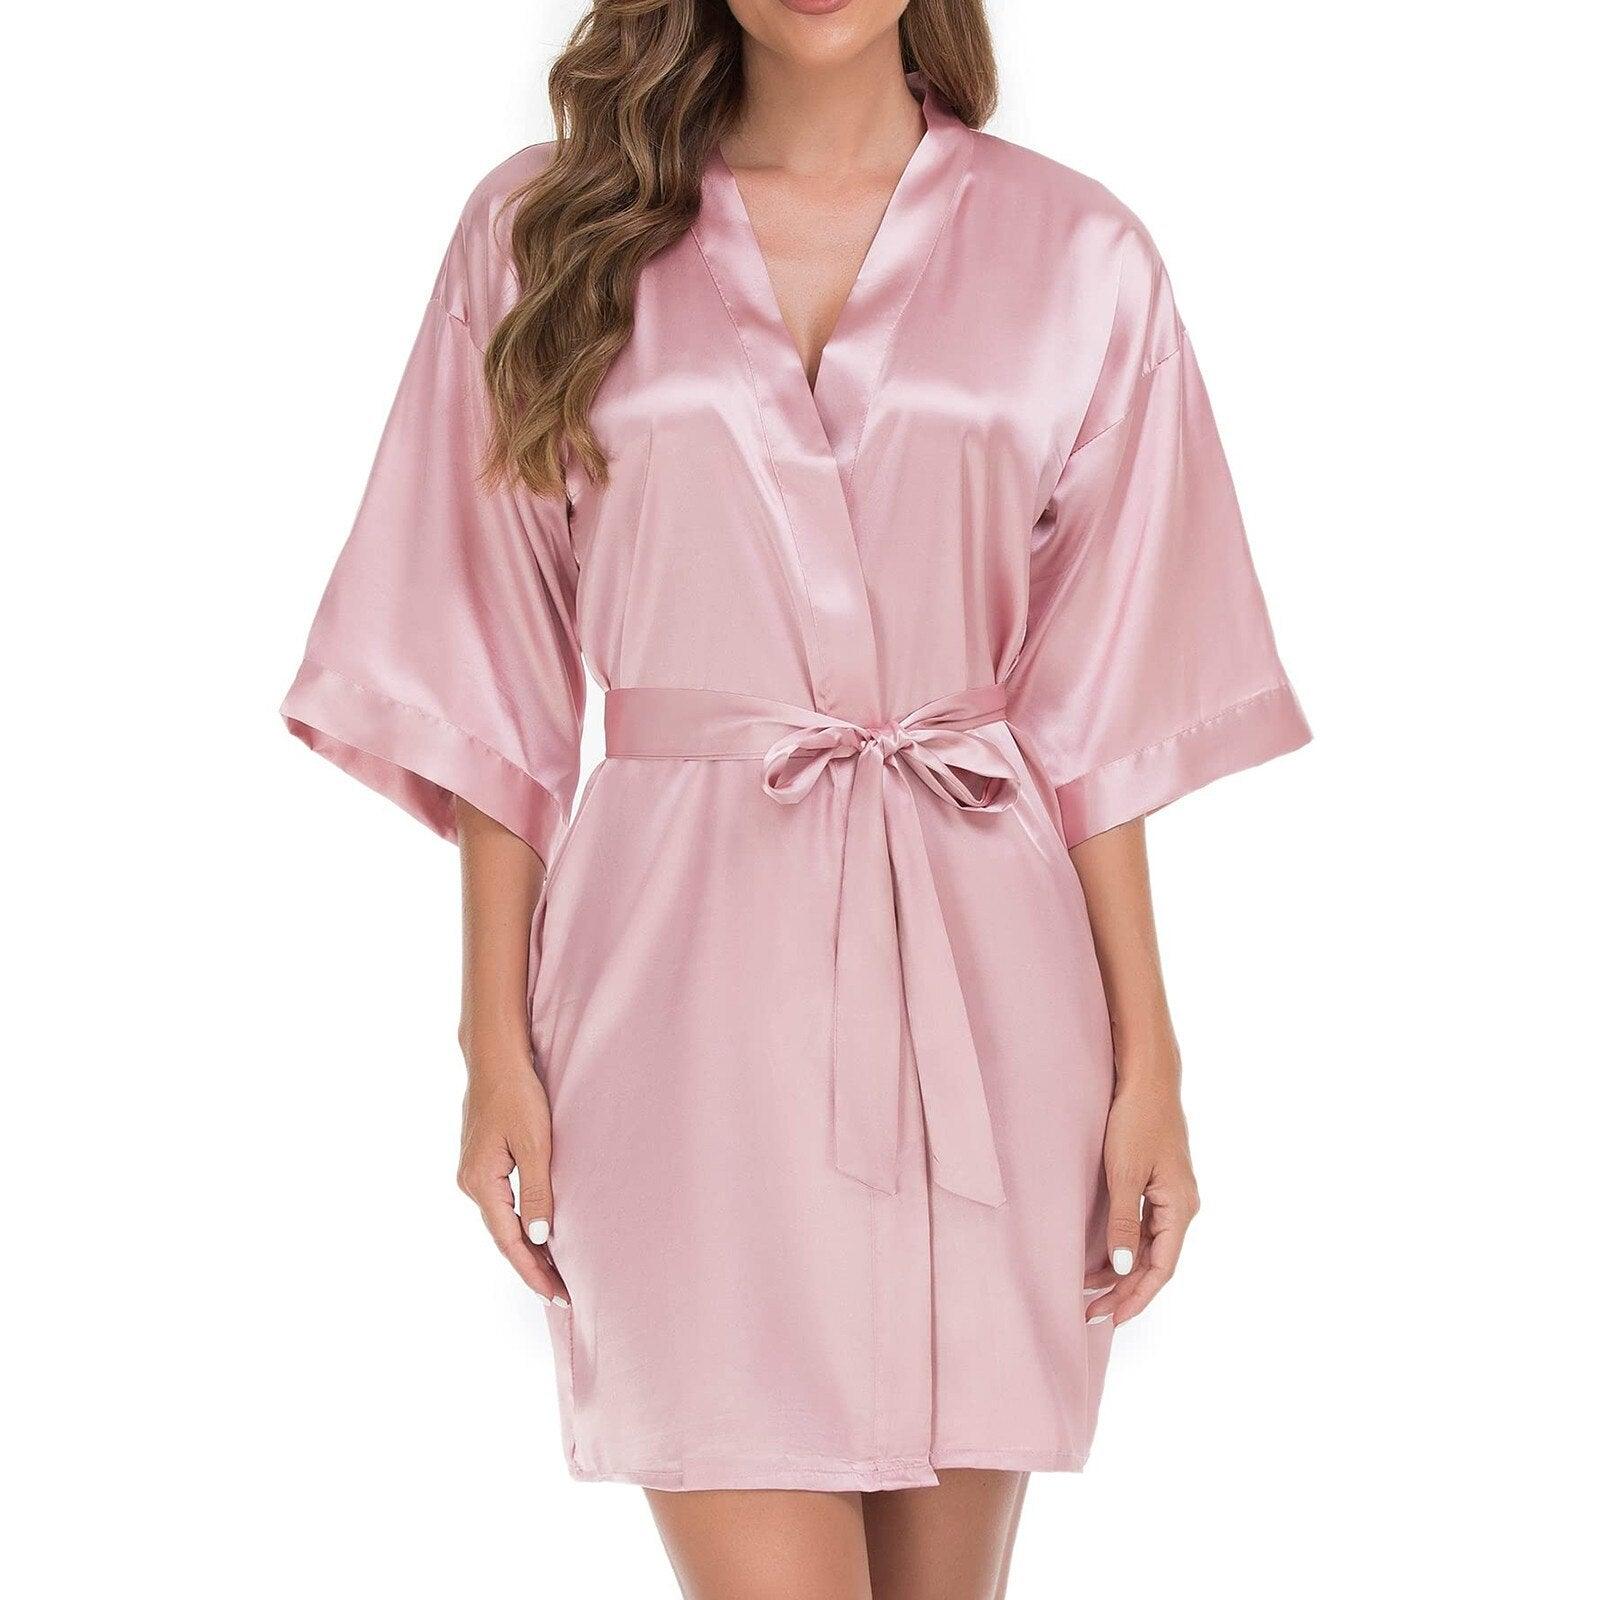 Buy Ladies Nightwear Robes, Kimonos & Dressing Gowns